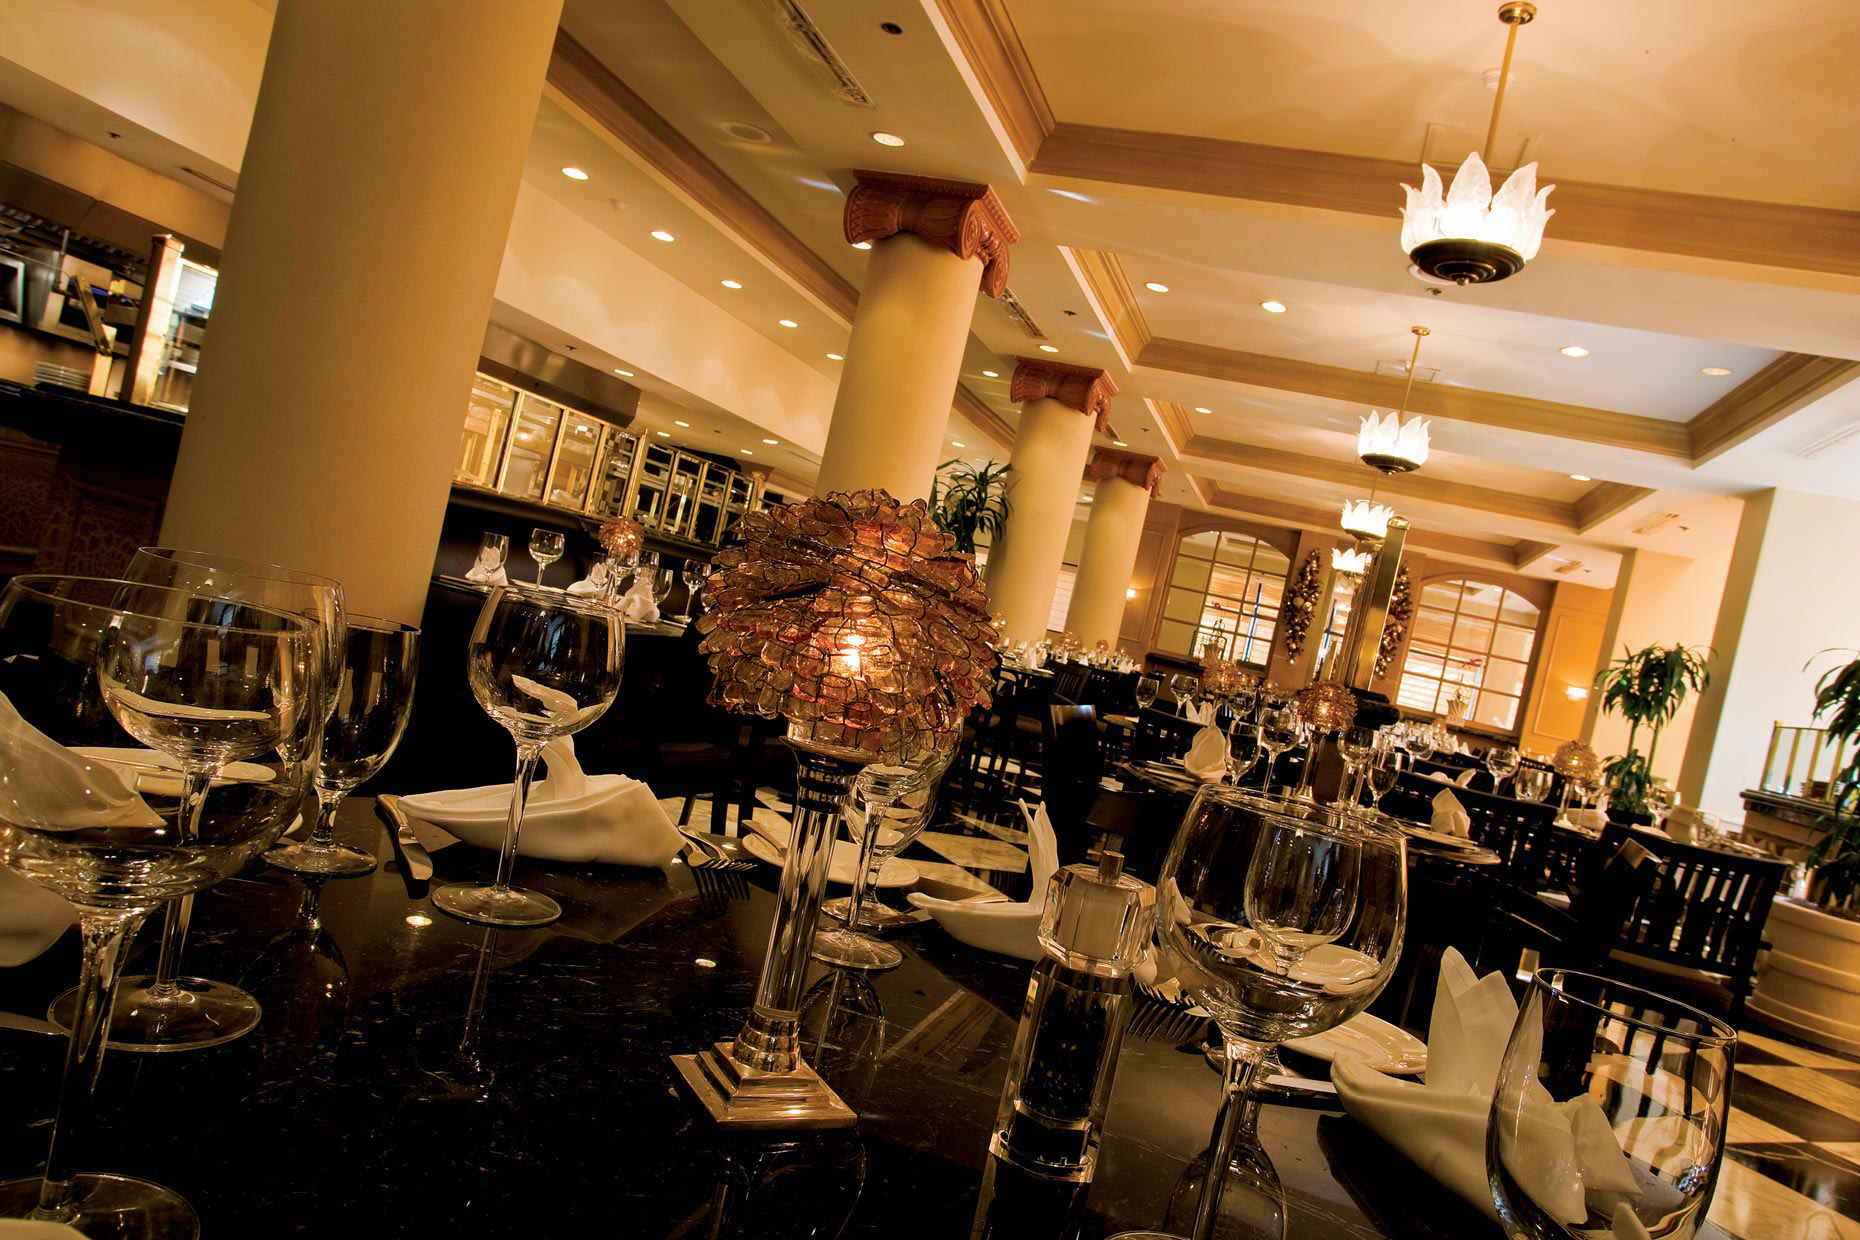  Chef & Restaurant Photography | Hyatt Hotel Restaurant Interior